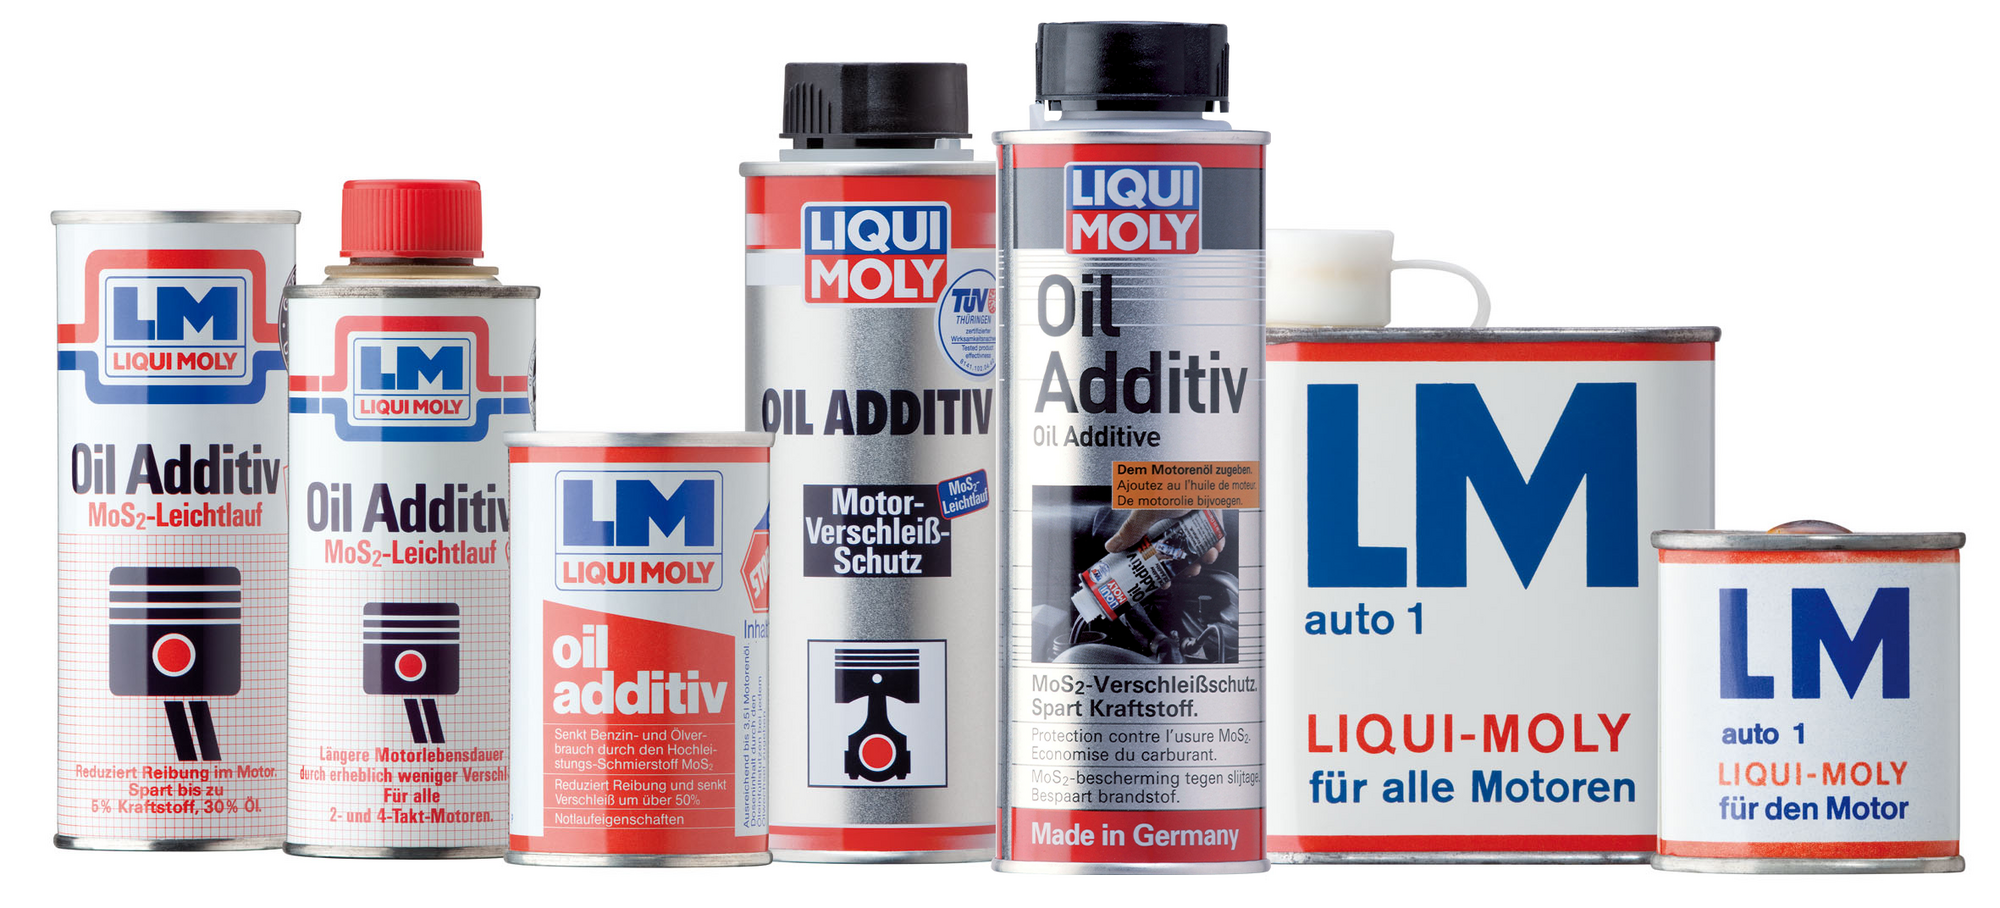 LIQUI MOLY Oil Additive: The classic against engine wear